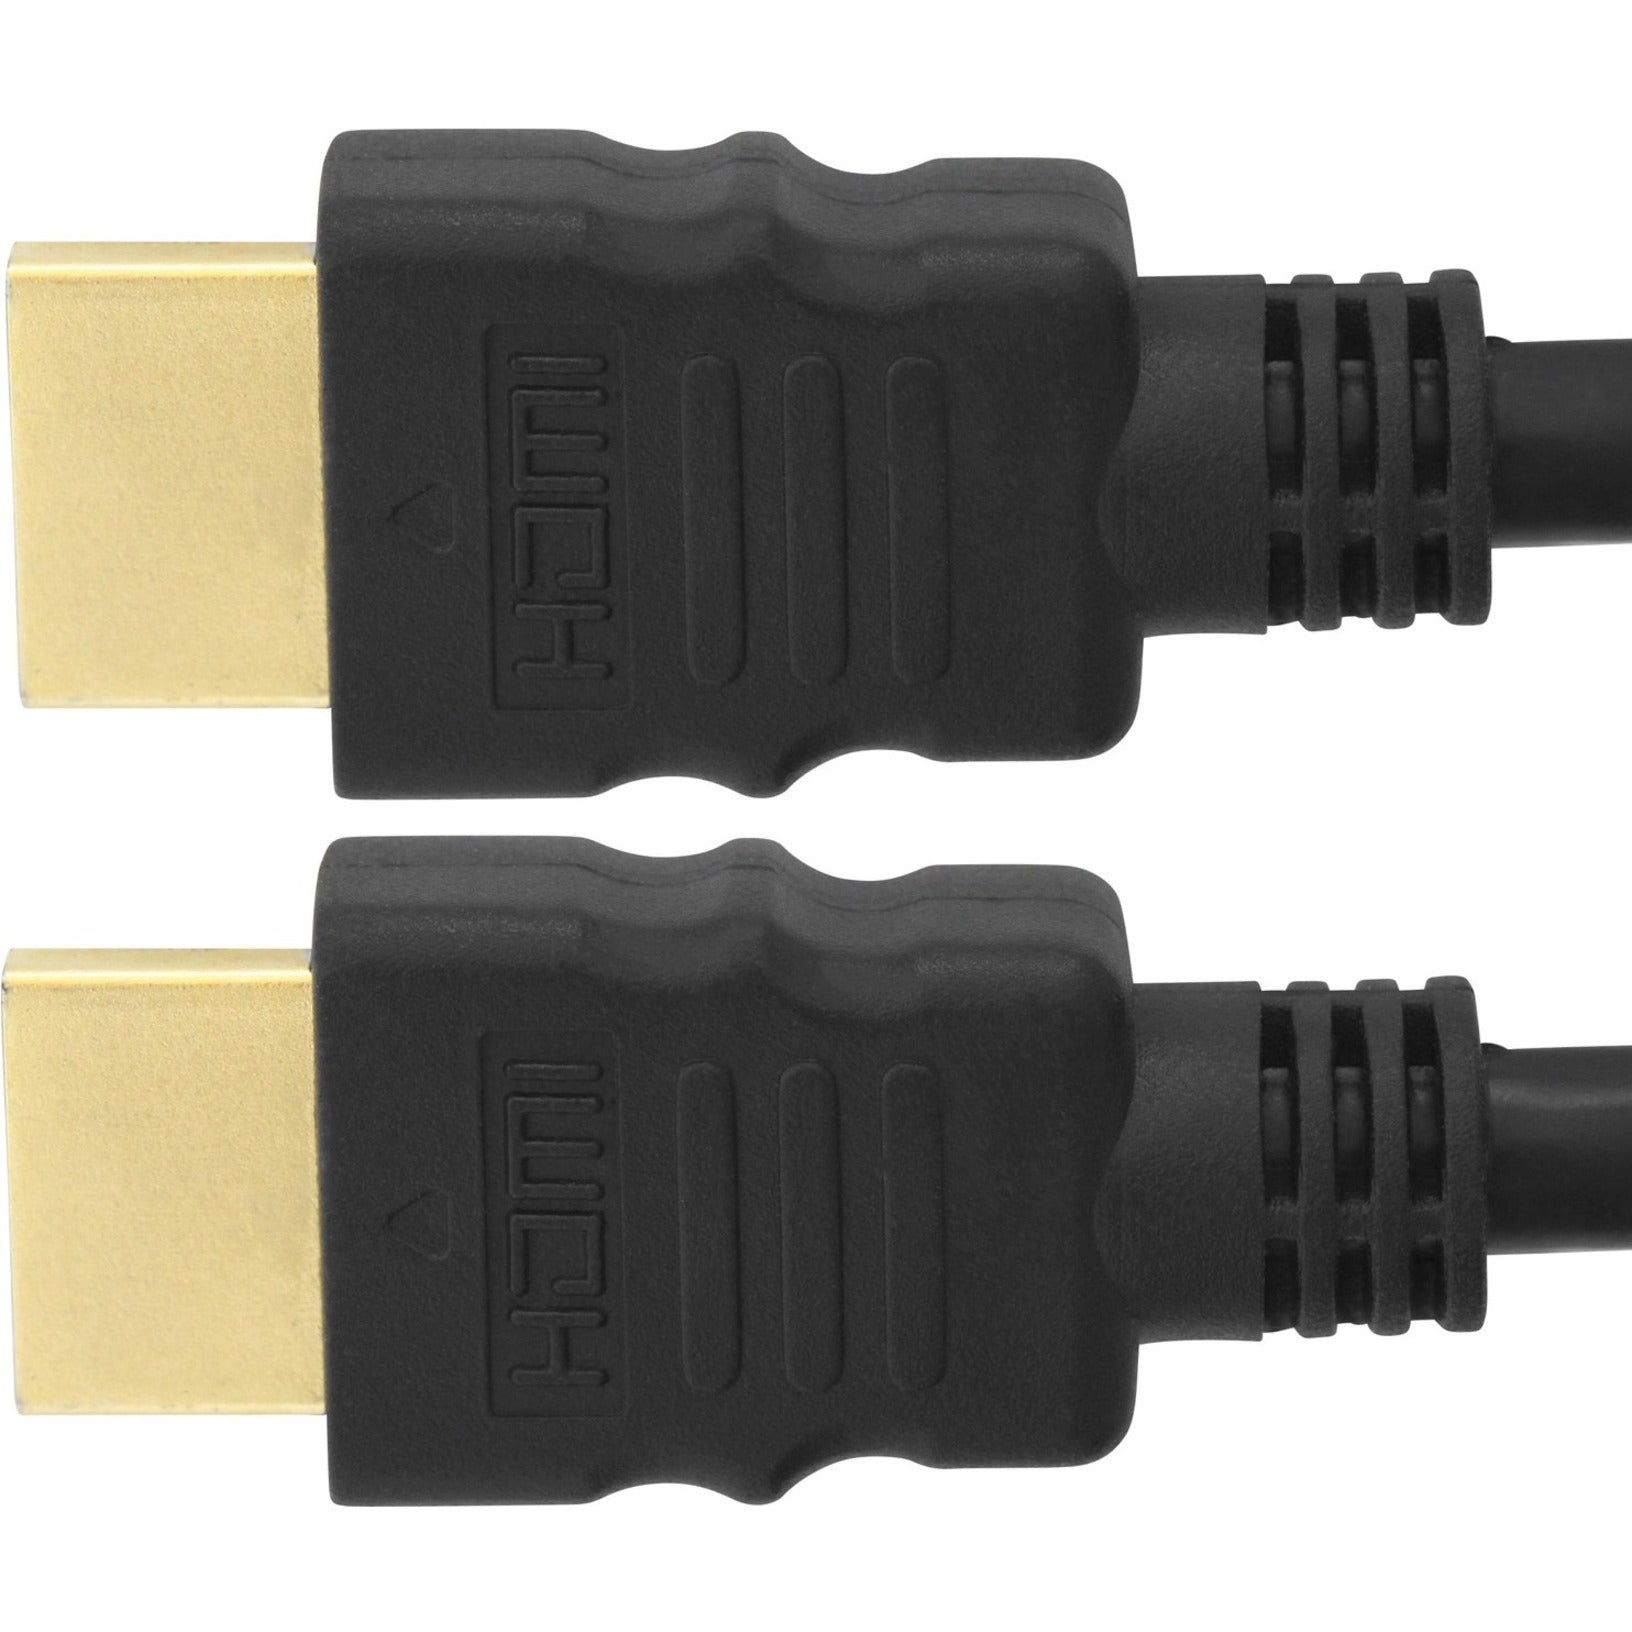 4XEM 4XHDMIMM10FT 10 pies 3m Cable HDMI de alta velocidad admite 1080p 3D Ethernet y Canal de Retorno de Audio